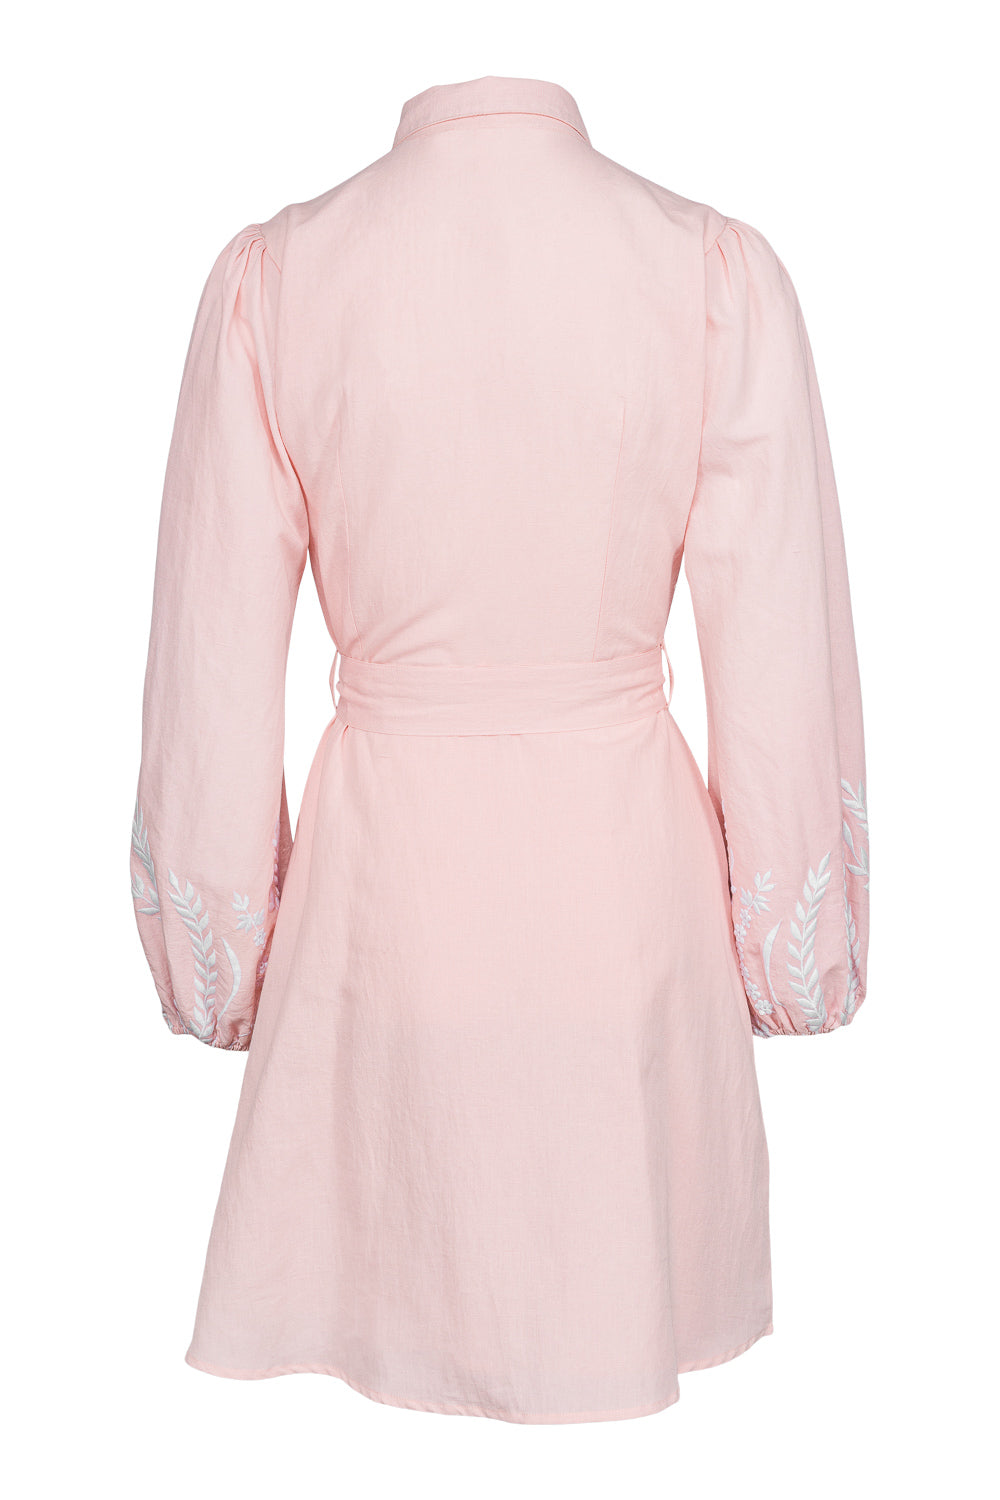 Berta Dress Light Pink w Embroidery